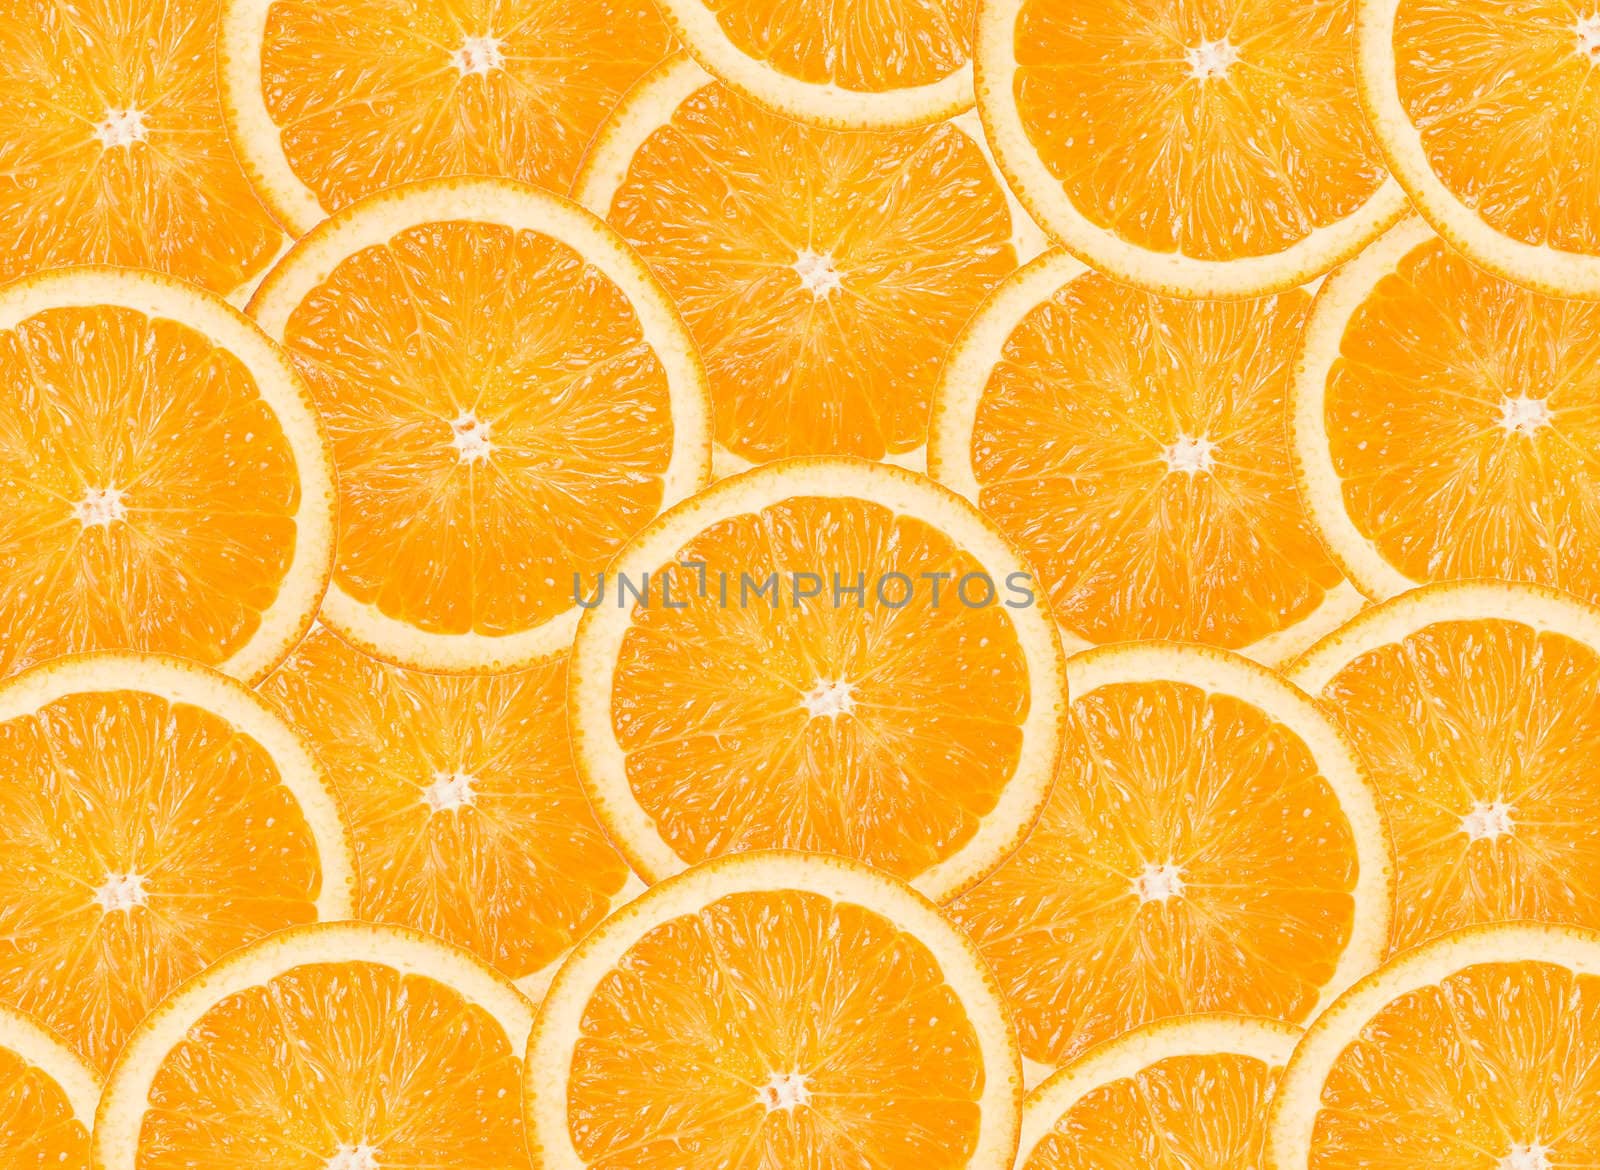 background from orange slices